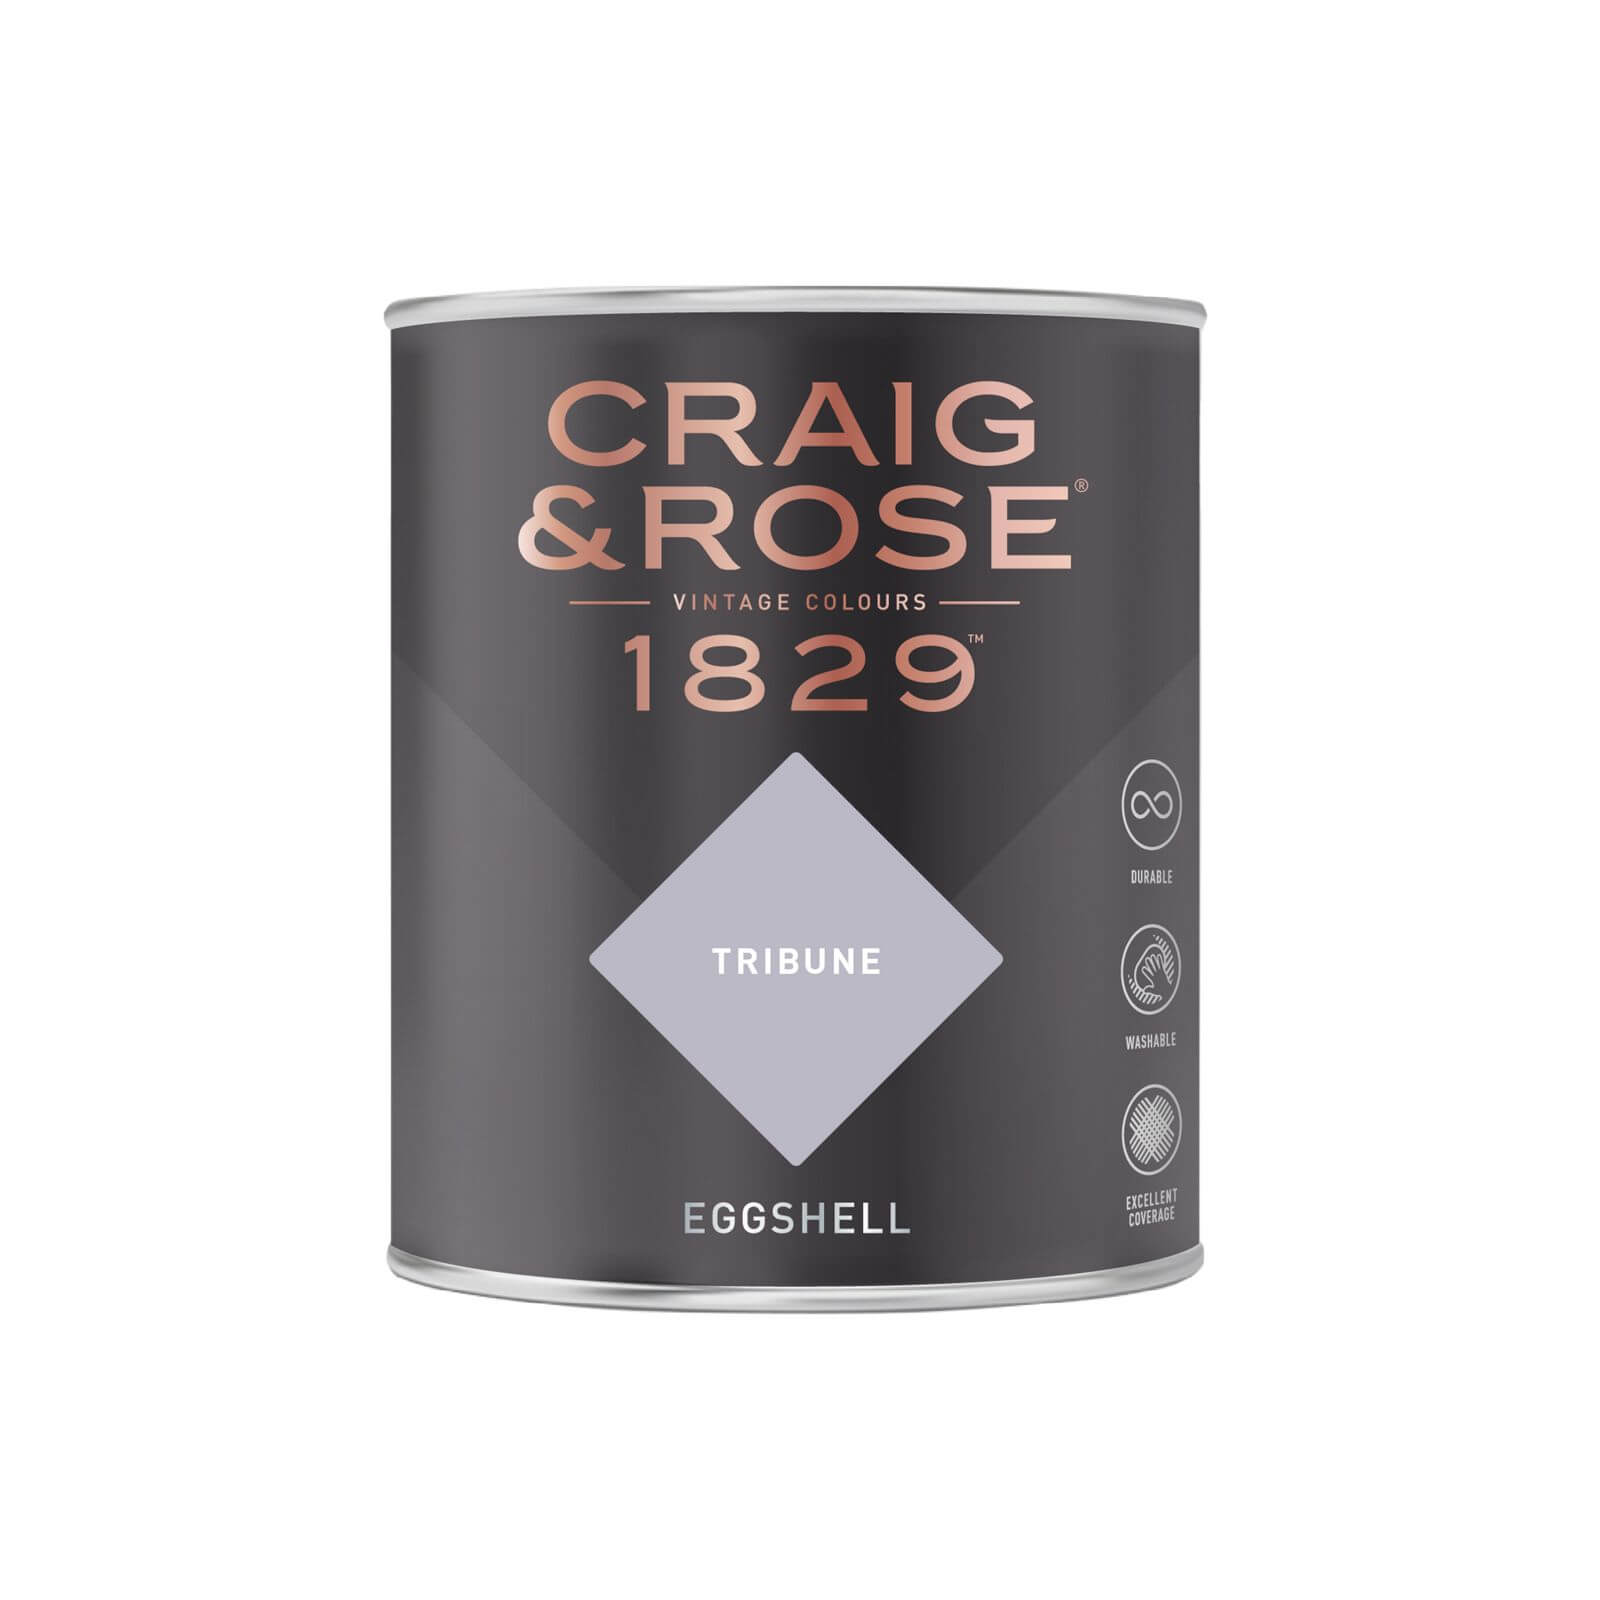 Craig & Rose 1829 Eggshell Paint Tribune - 750ml